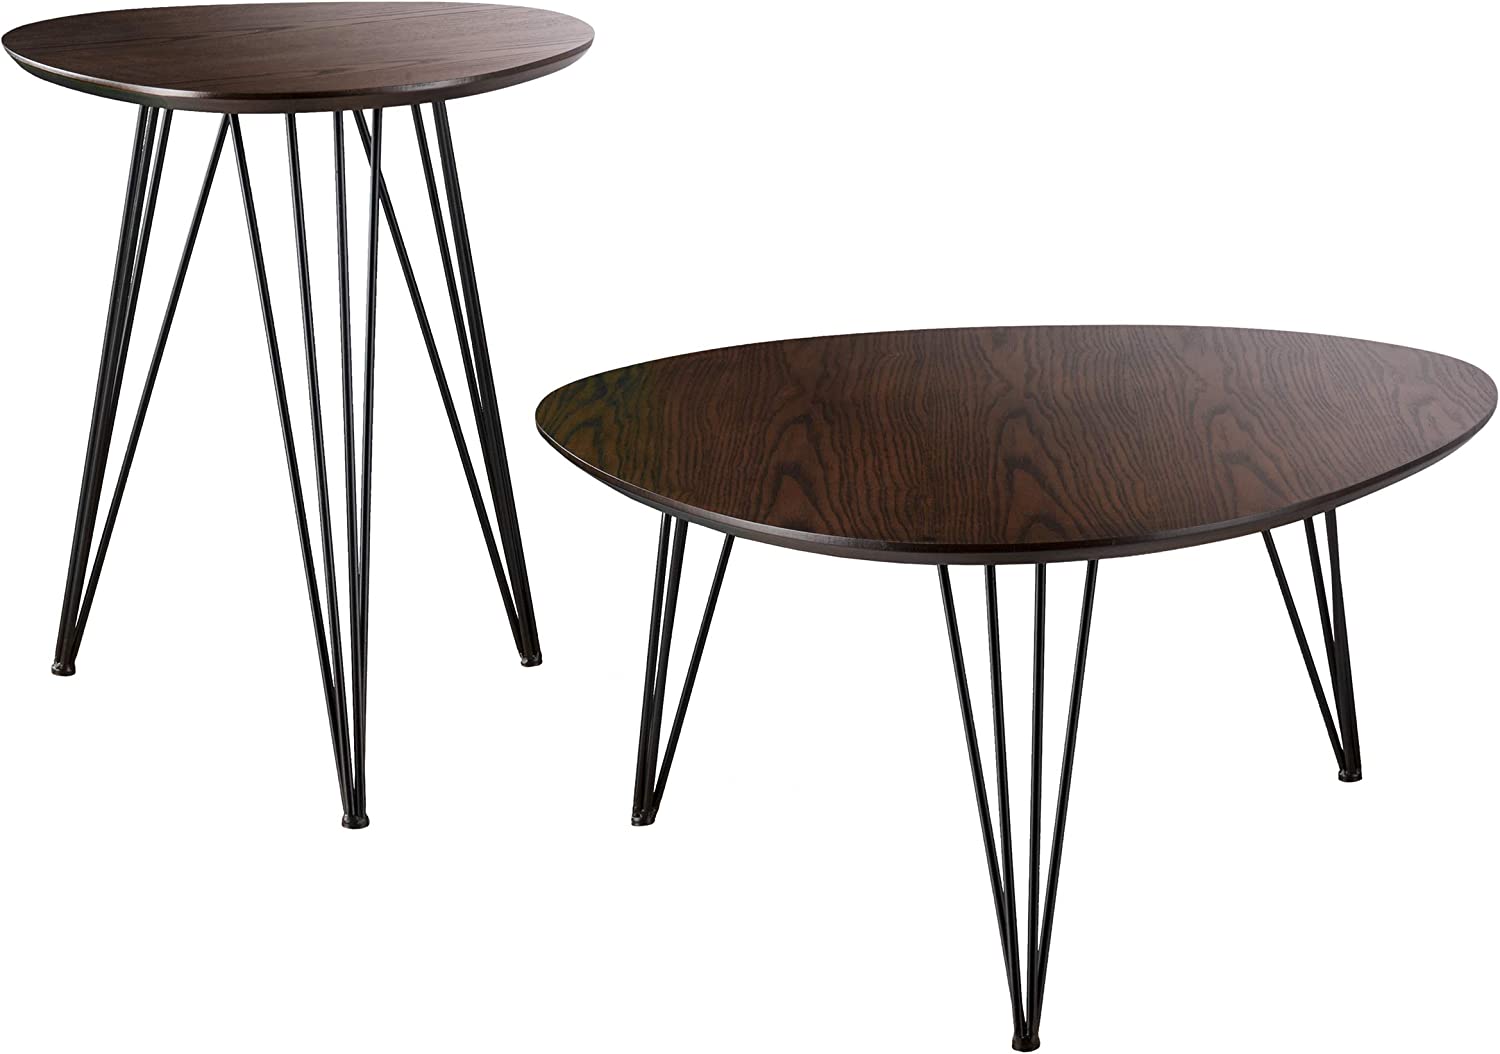 SEI Furniture Bannock Accent Table - Set of 2, Small &amp; Large Tables - Dark Tobacco w/Black Finish